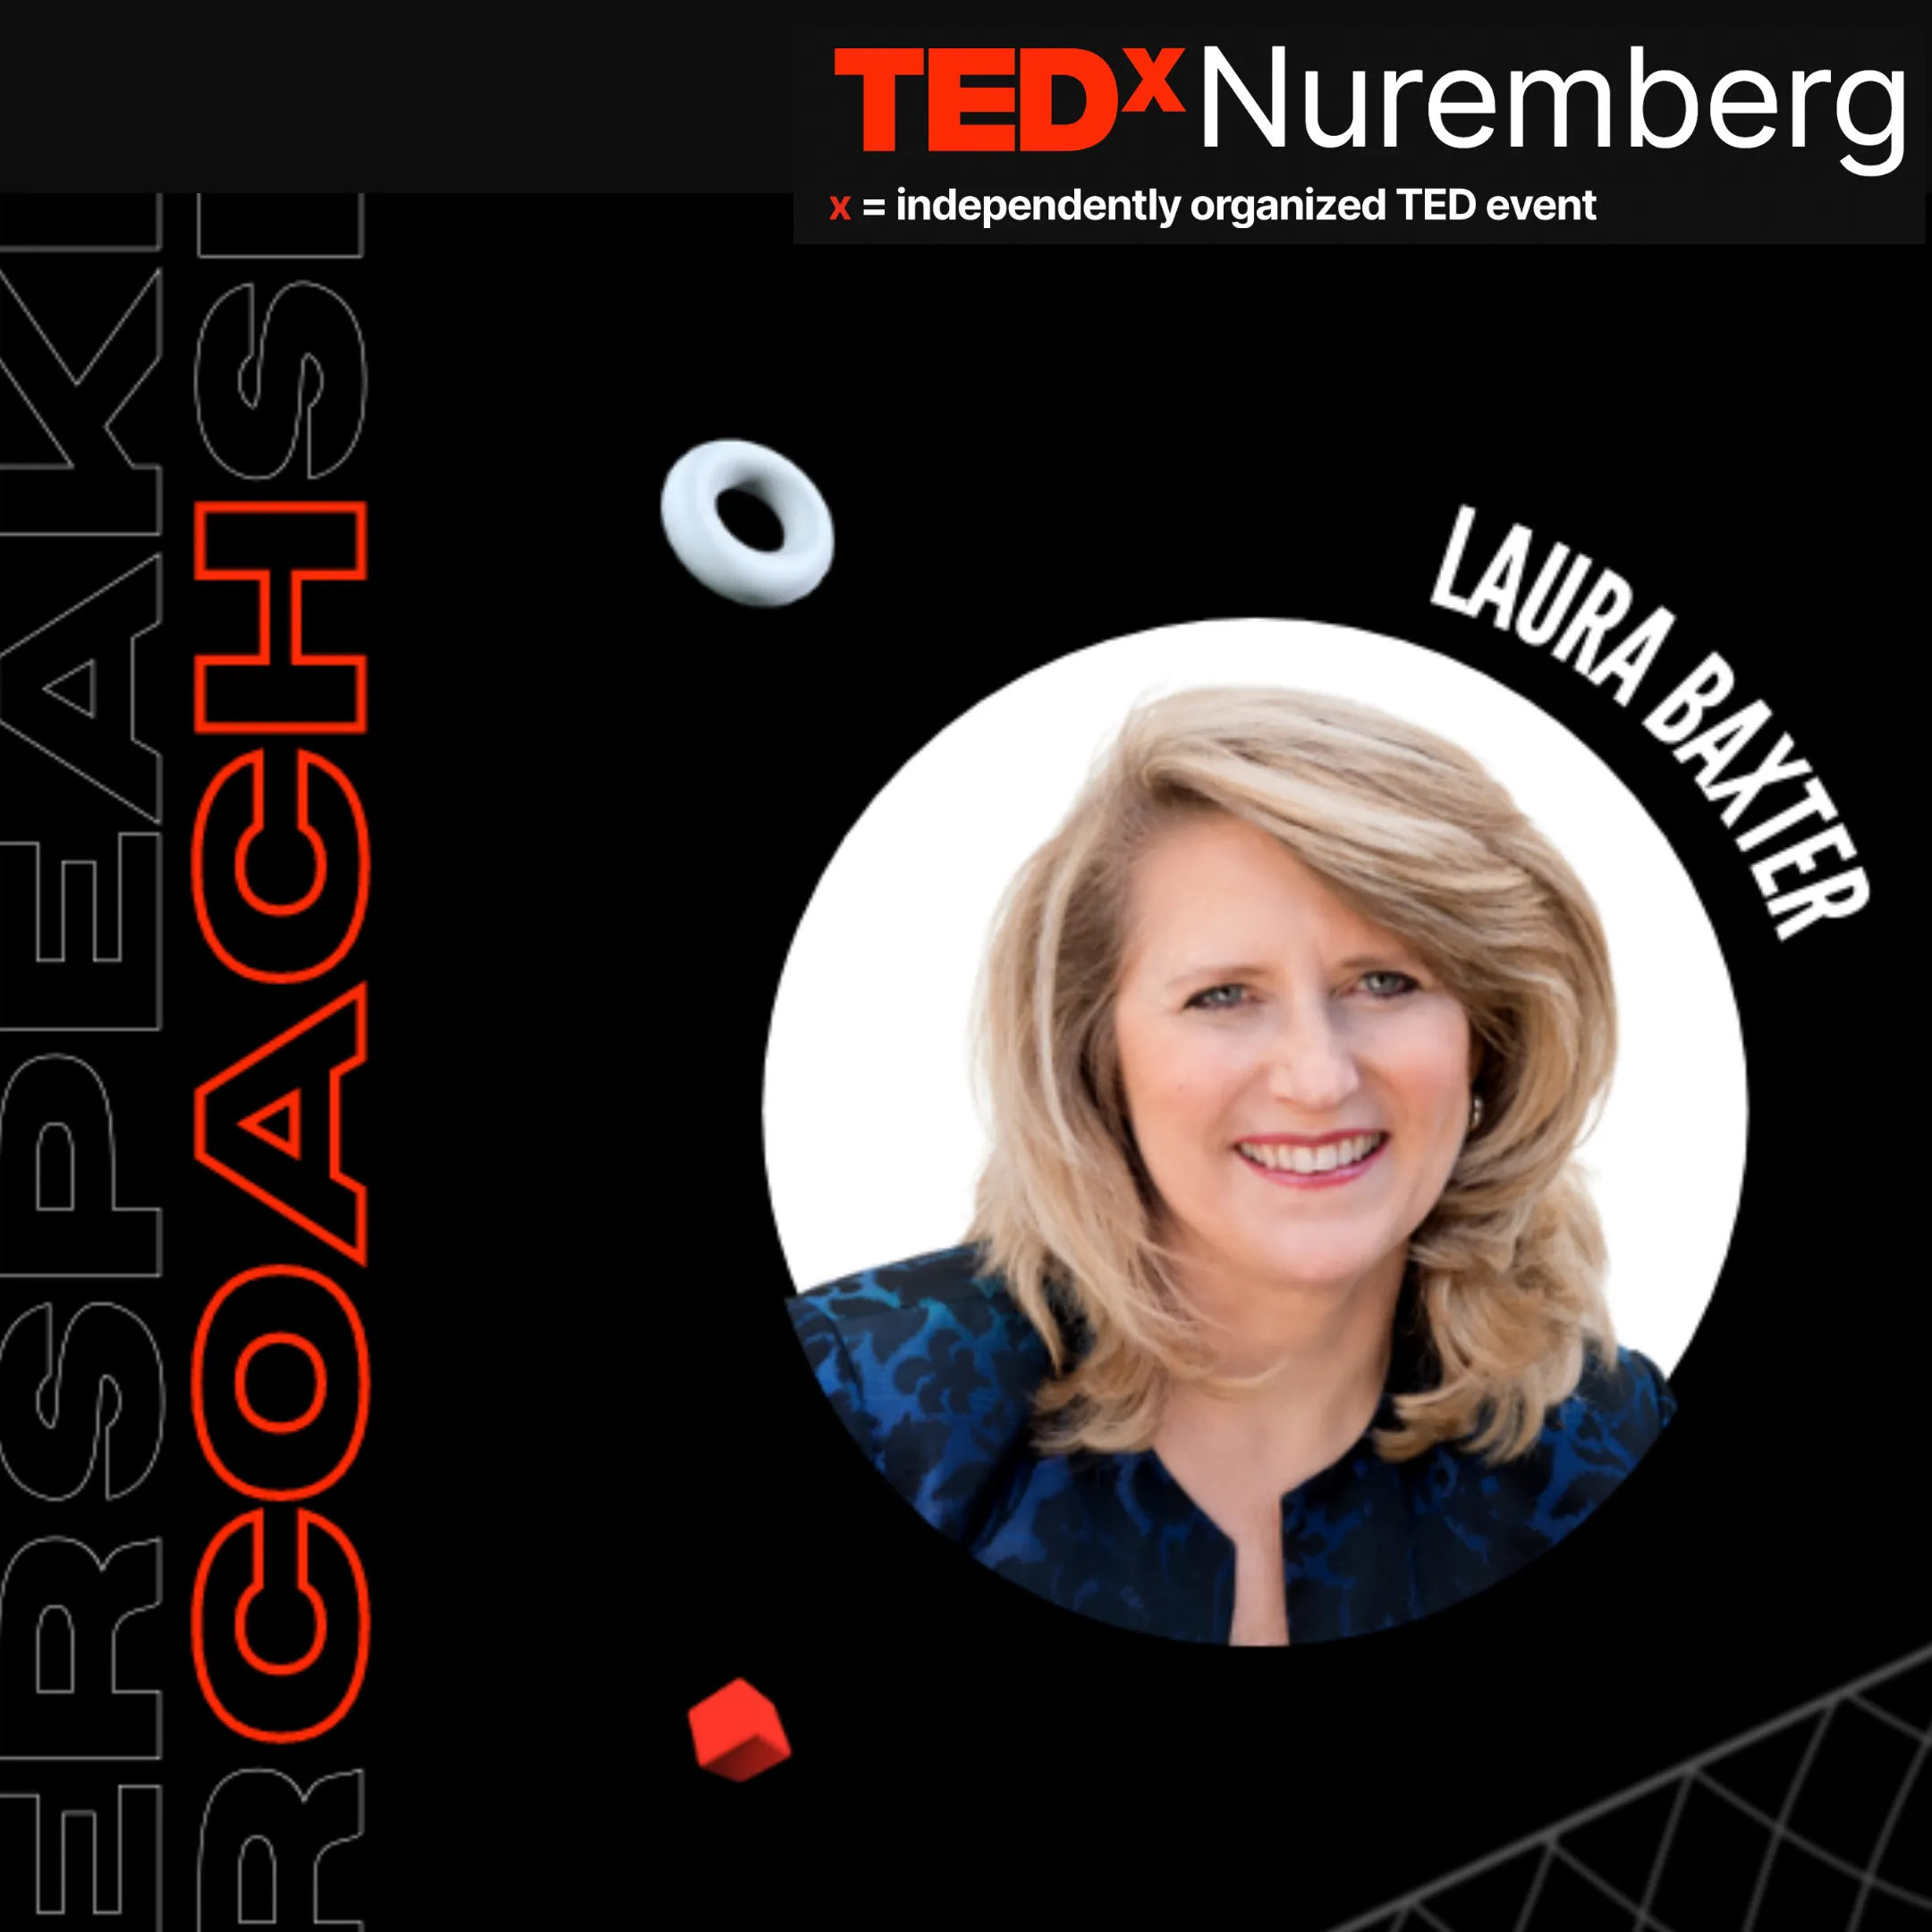 TEDx Nueremberg Coach Laura Baxter